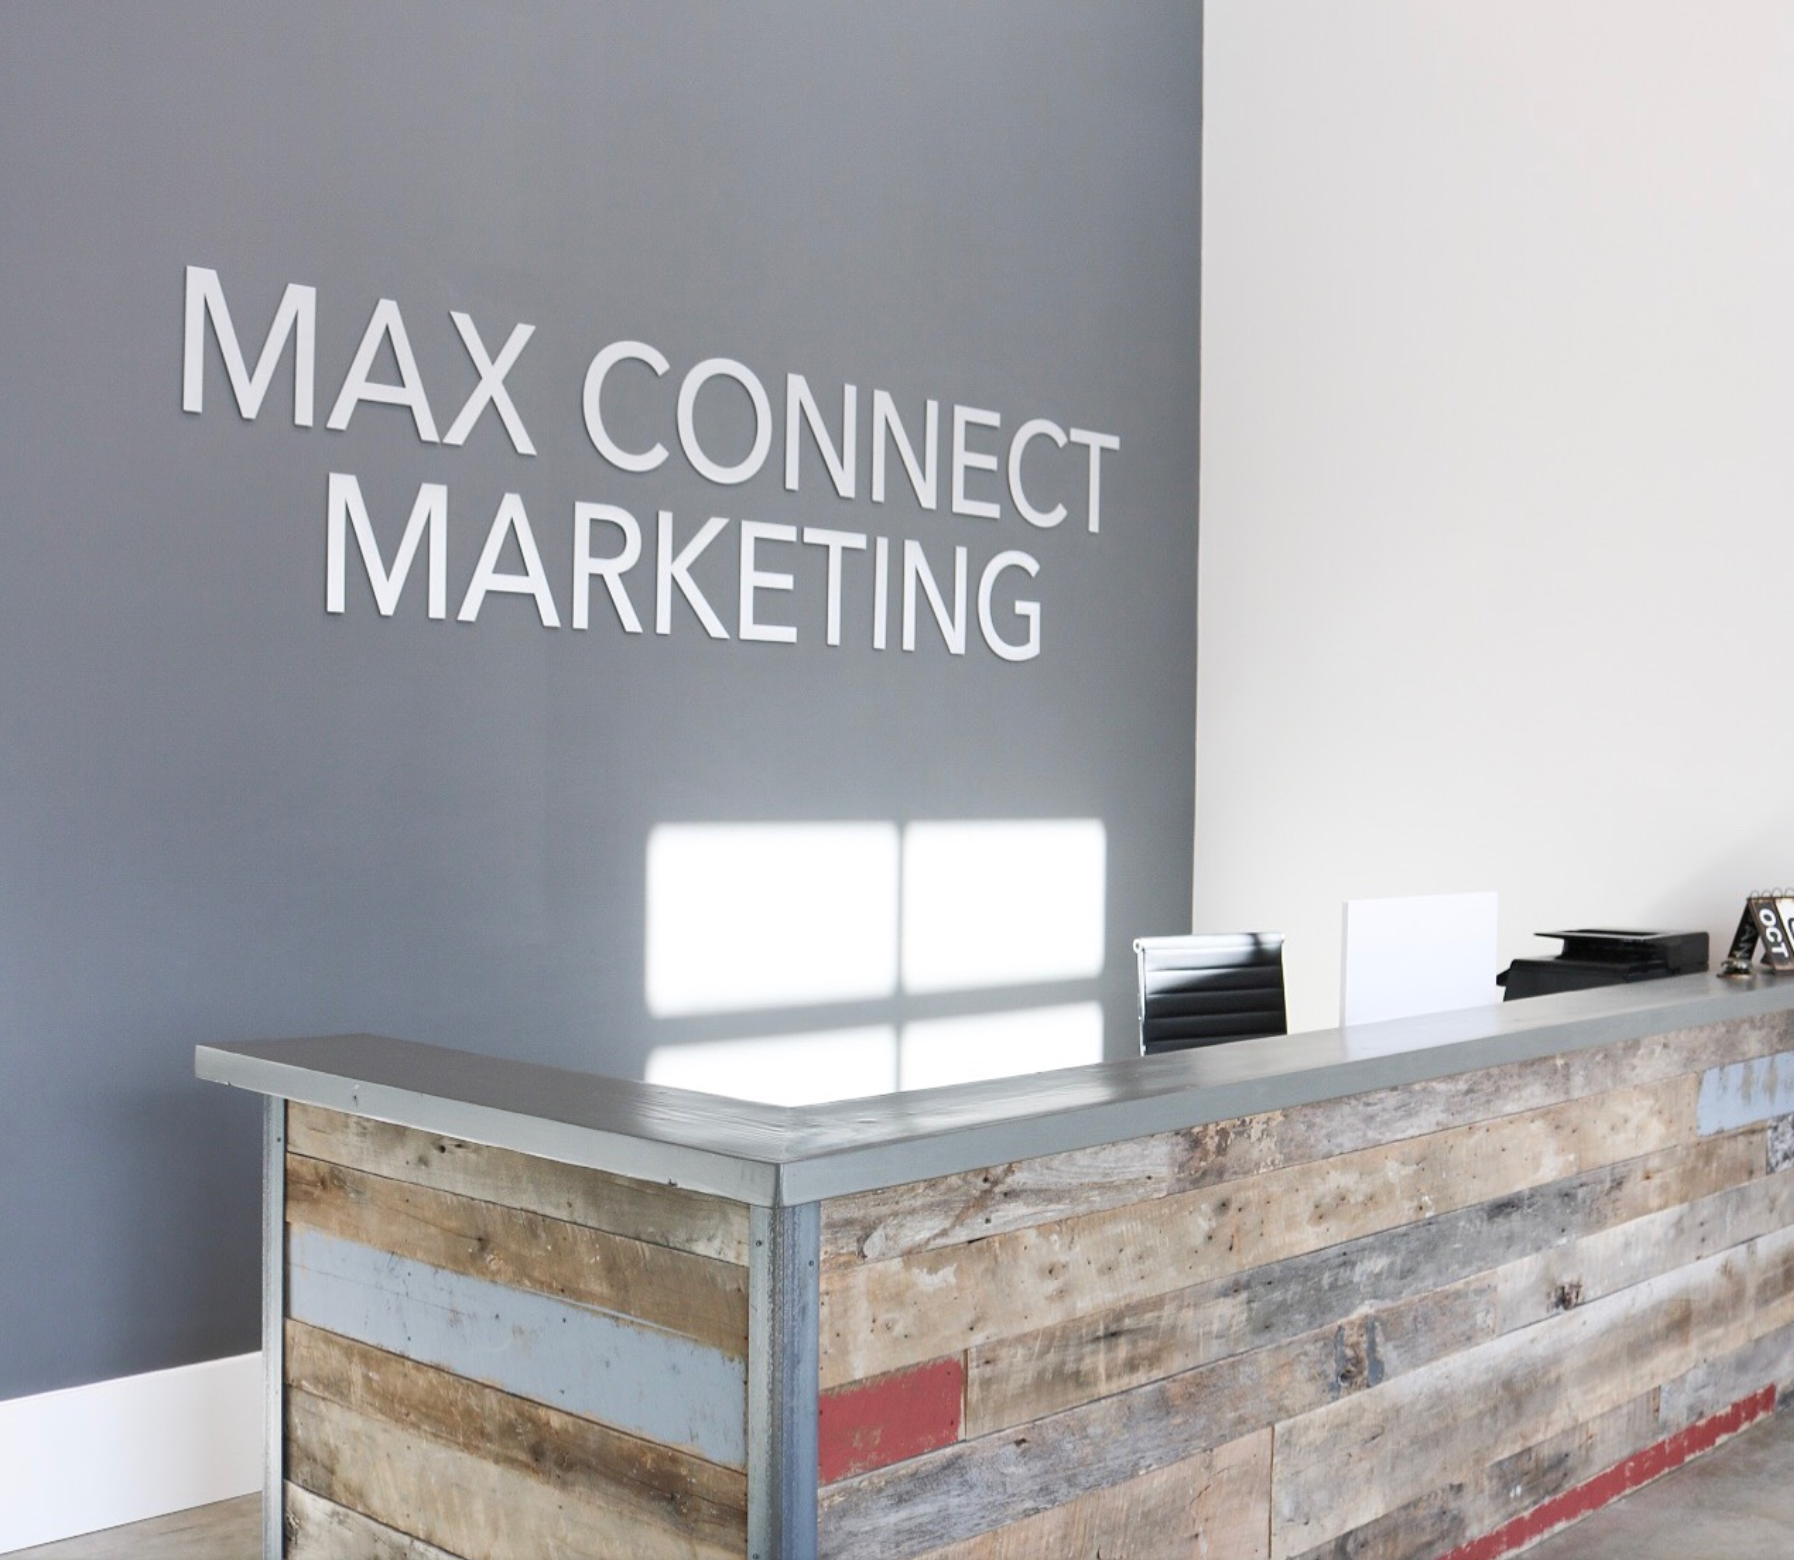 Max Connect Marketing Photo